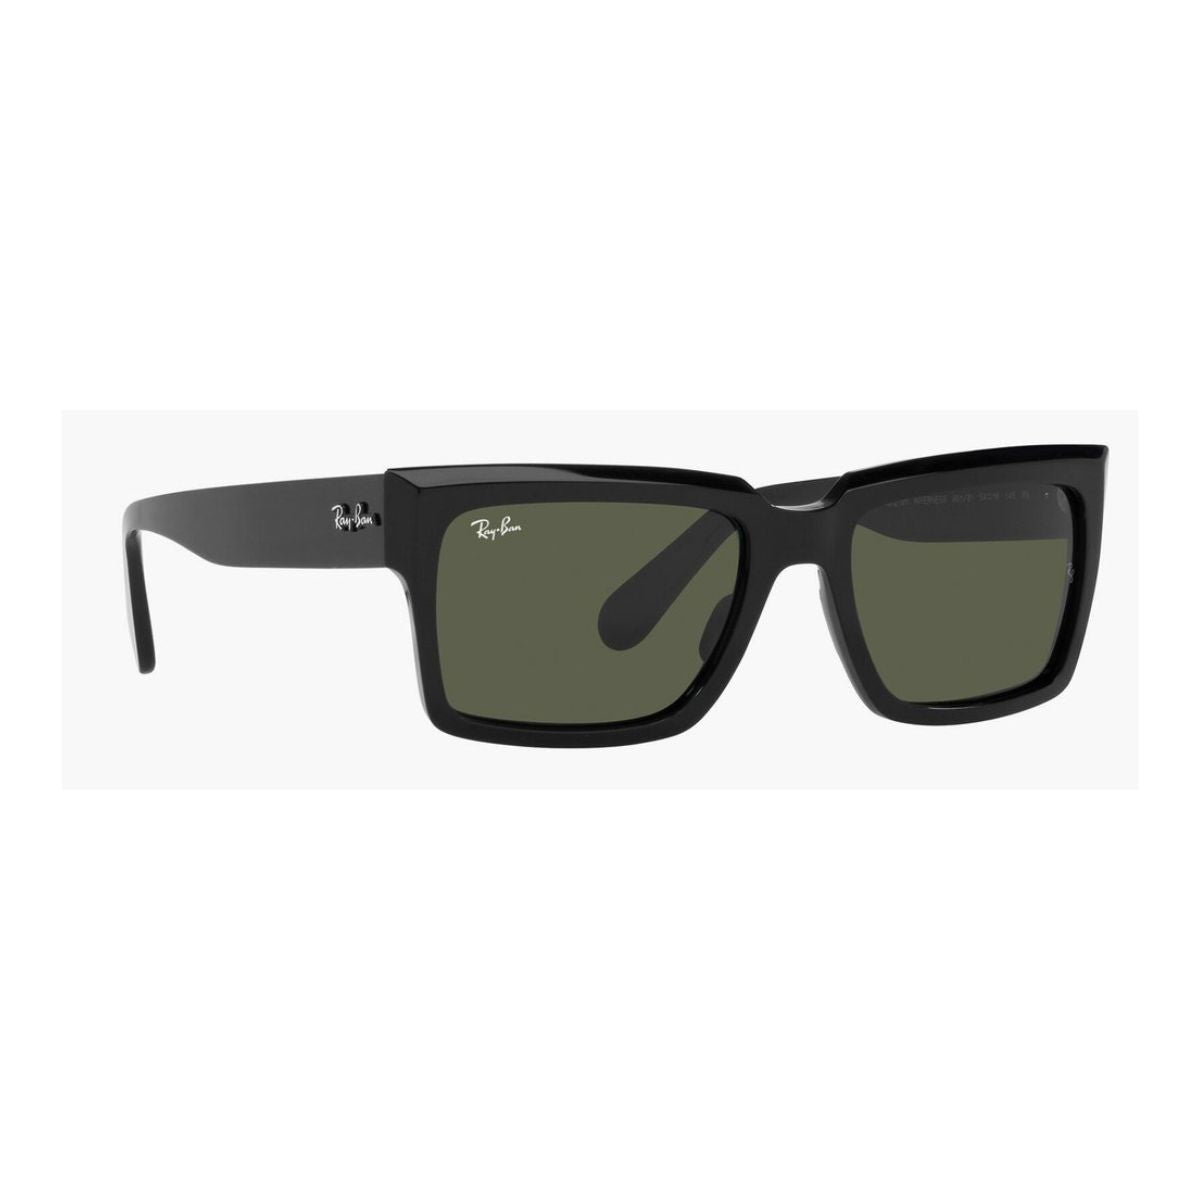 "Best Rayban 2191 901/31 Square Sunglasses For Men's Online At Optorium"